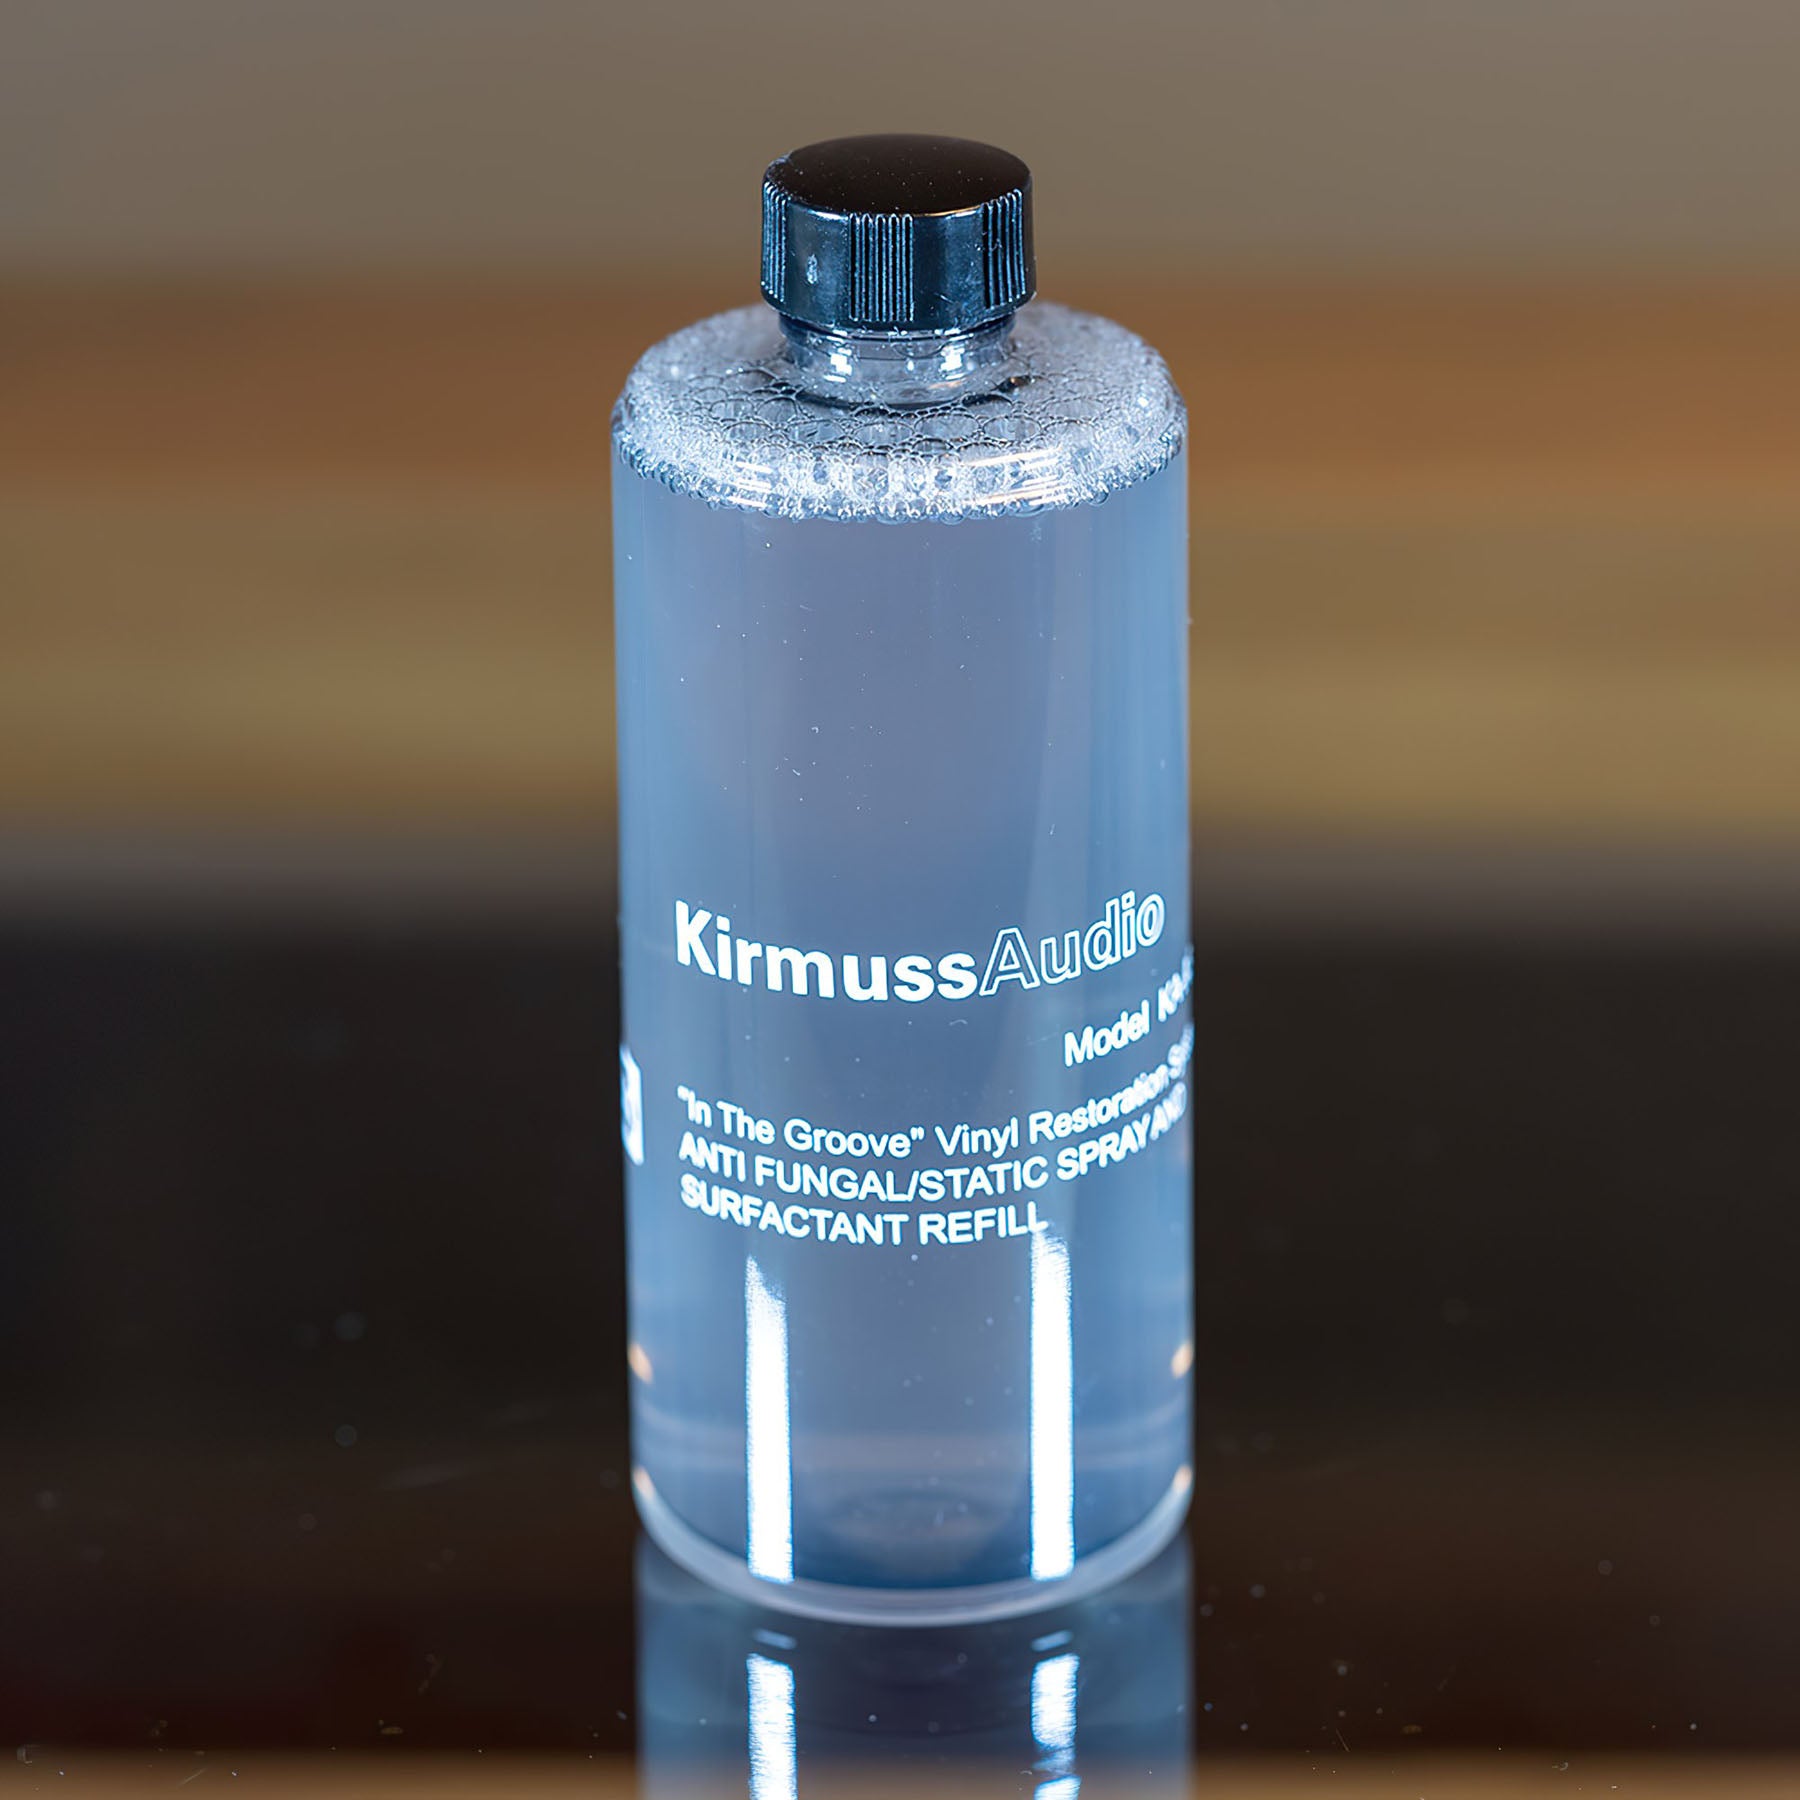 Kirmuss Audio KA-AS1-R1 300ml Kirmuss Audio Bottle of Surfactant Solution Refill